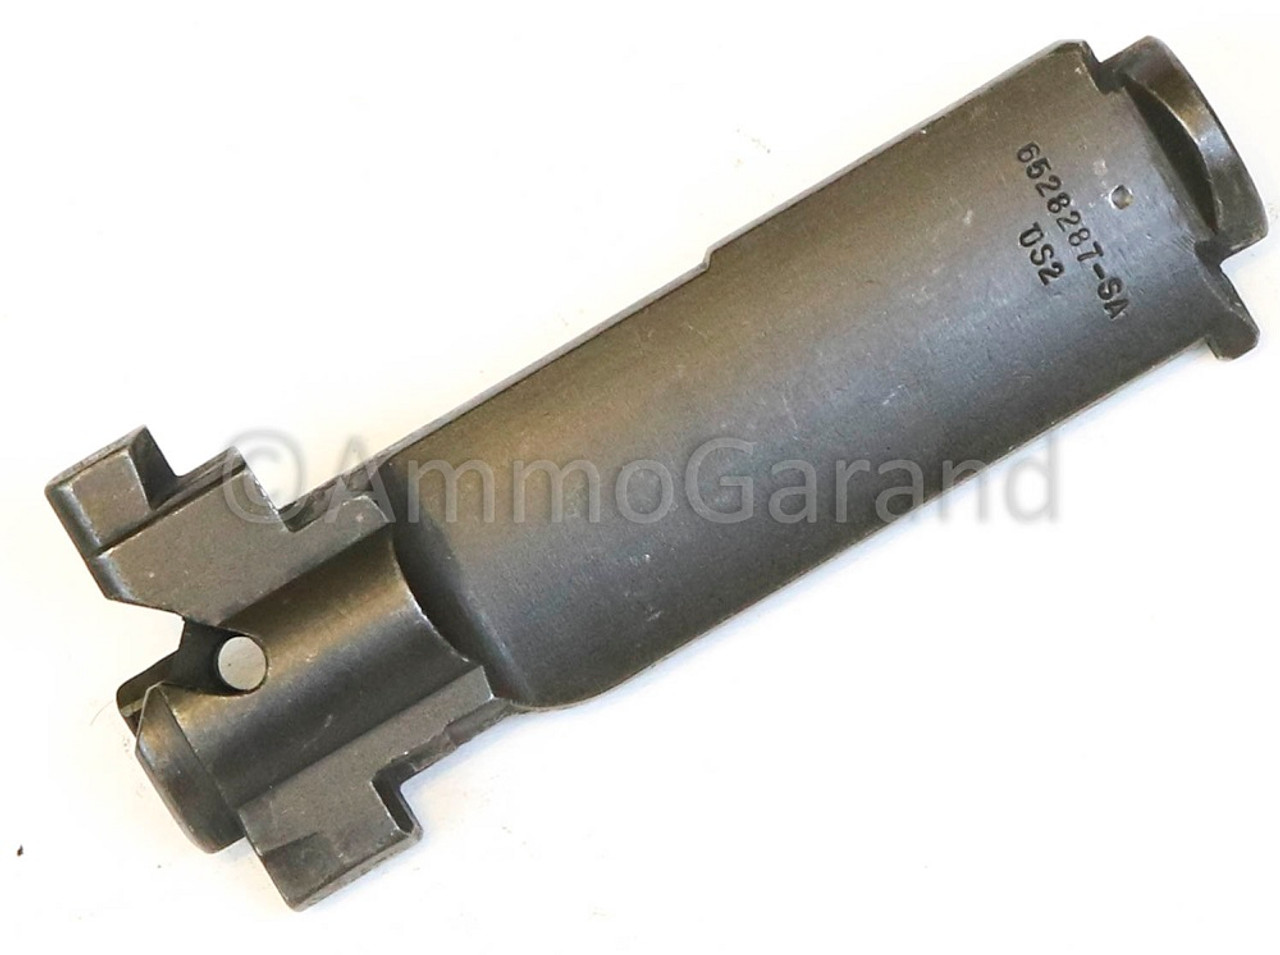 M1 Garand Bolt Springfield 6528287-SA US2 4.24-4.28 mil use